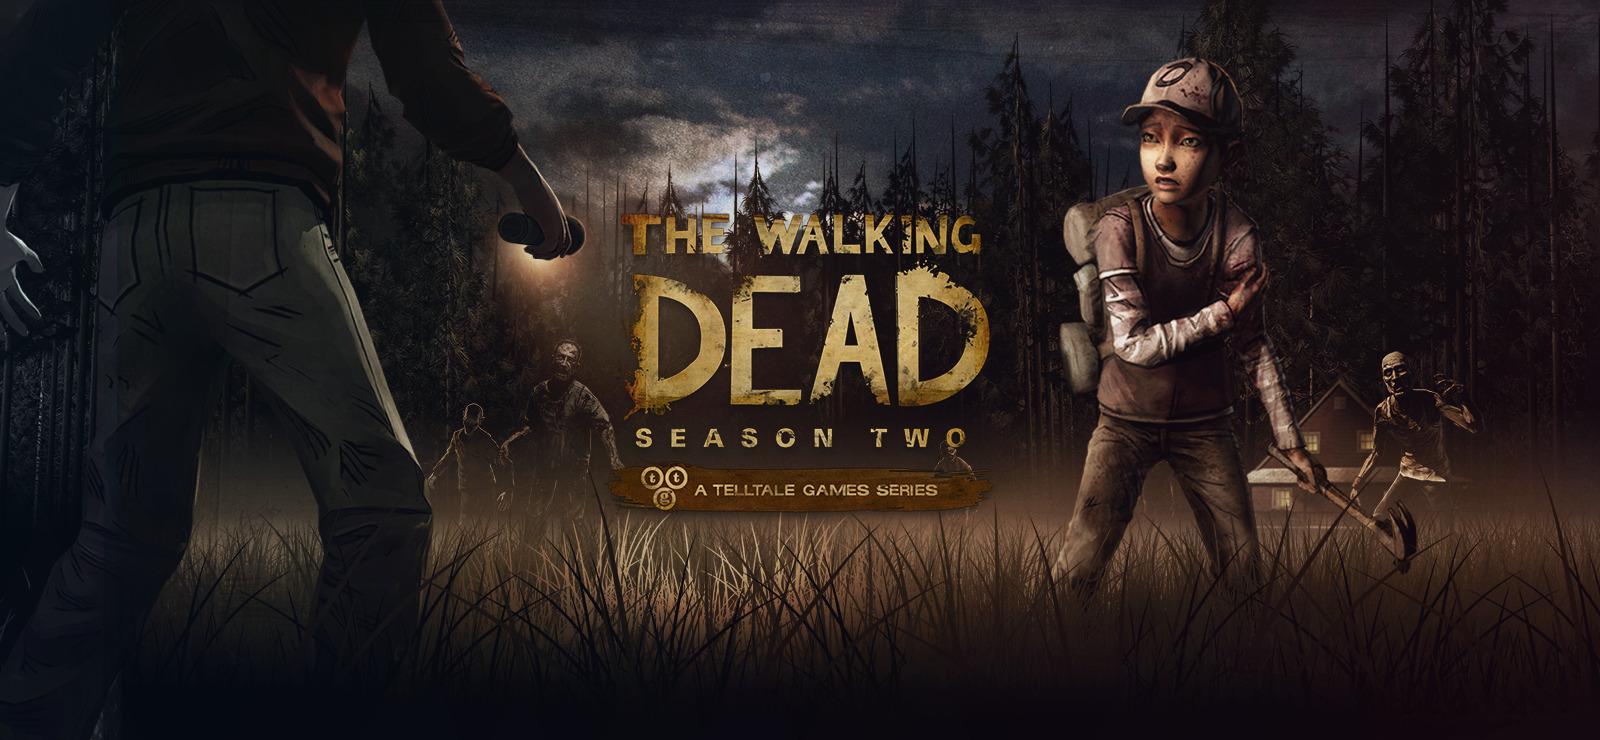 احتمالات تجاوز لحني  The Walking Dead: Season Two Free Download (v3.0) » GOG Unlocked